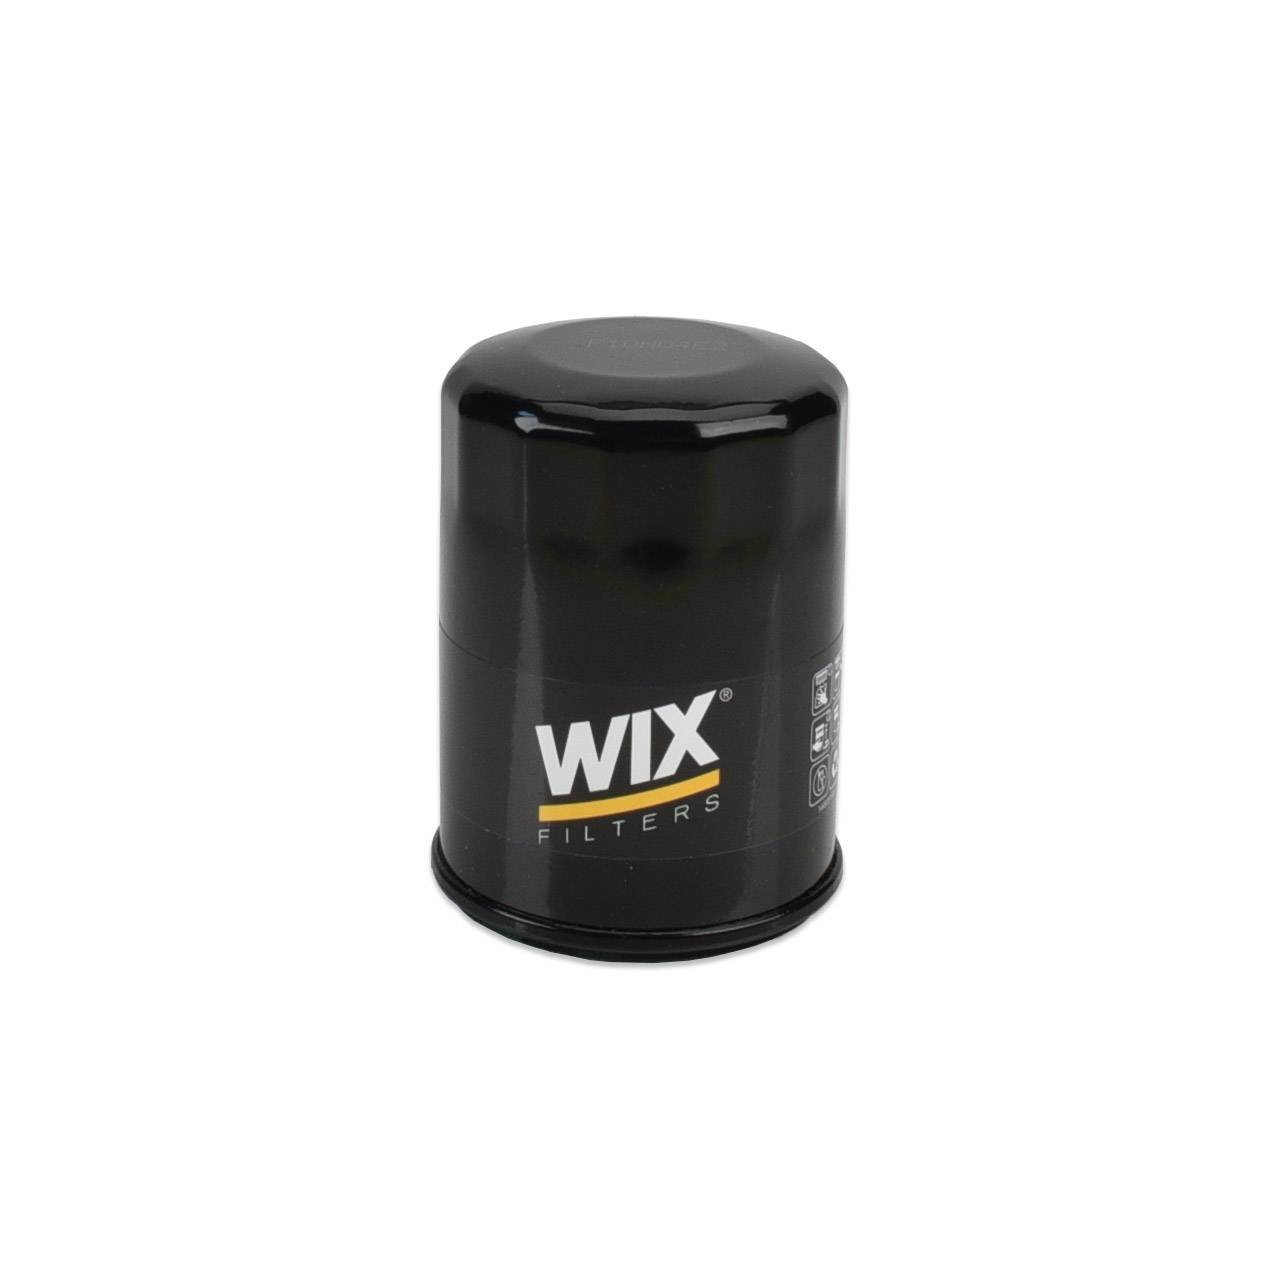 WIX Oil Filter for 02-14 Subaru WRX, 2004-21 STI